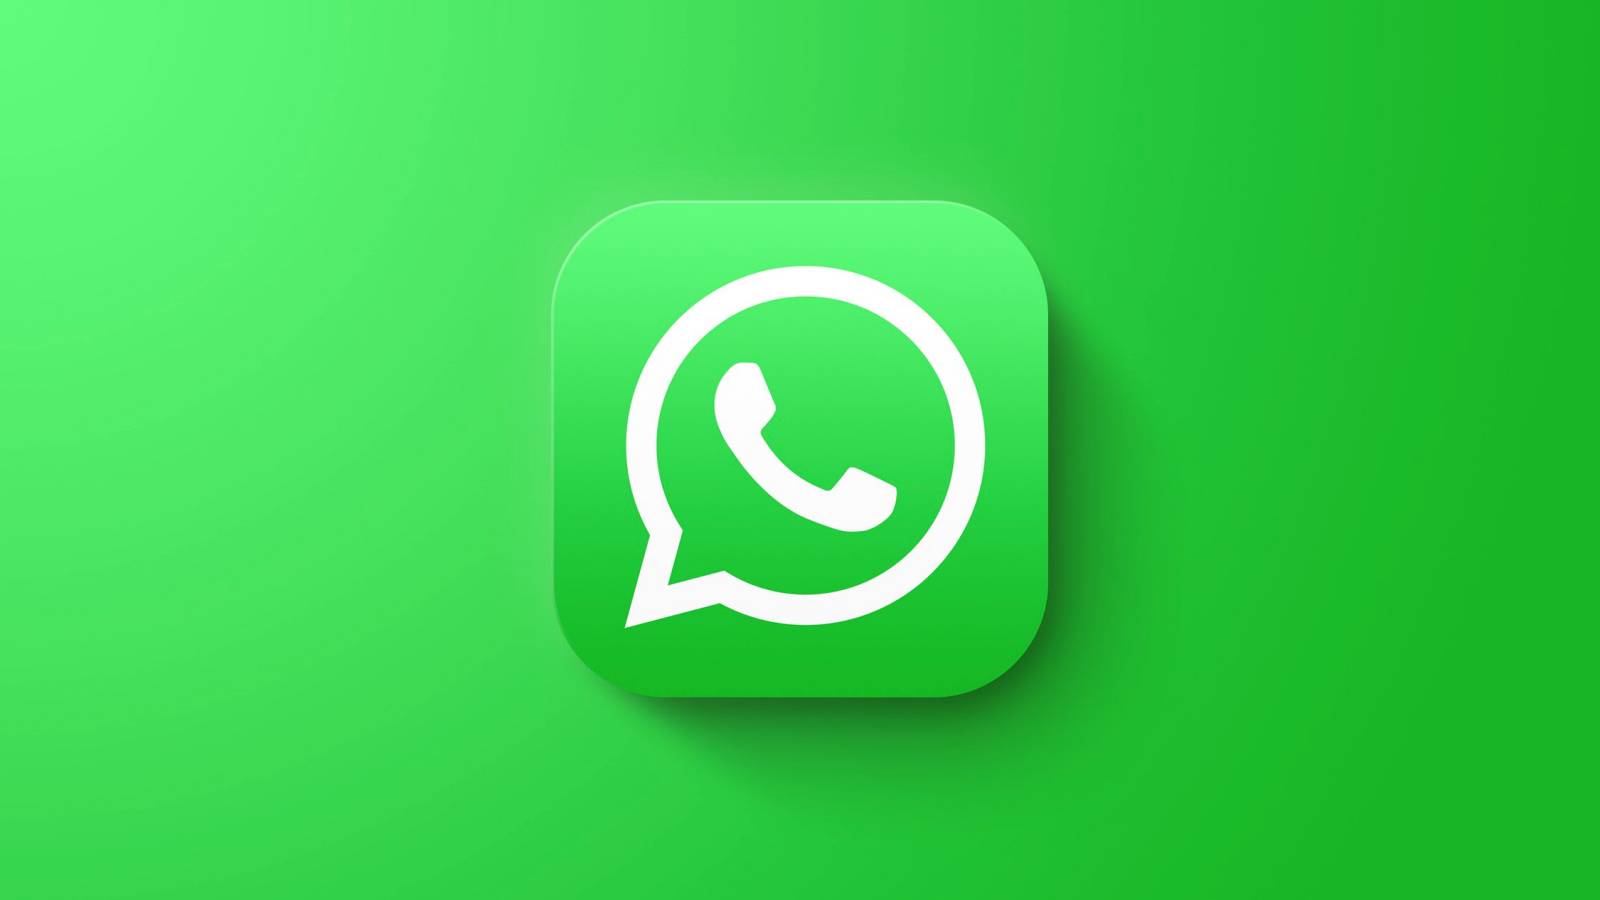 whatsapp ciclu